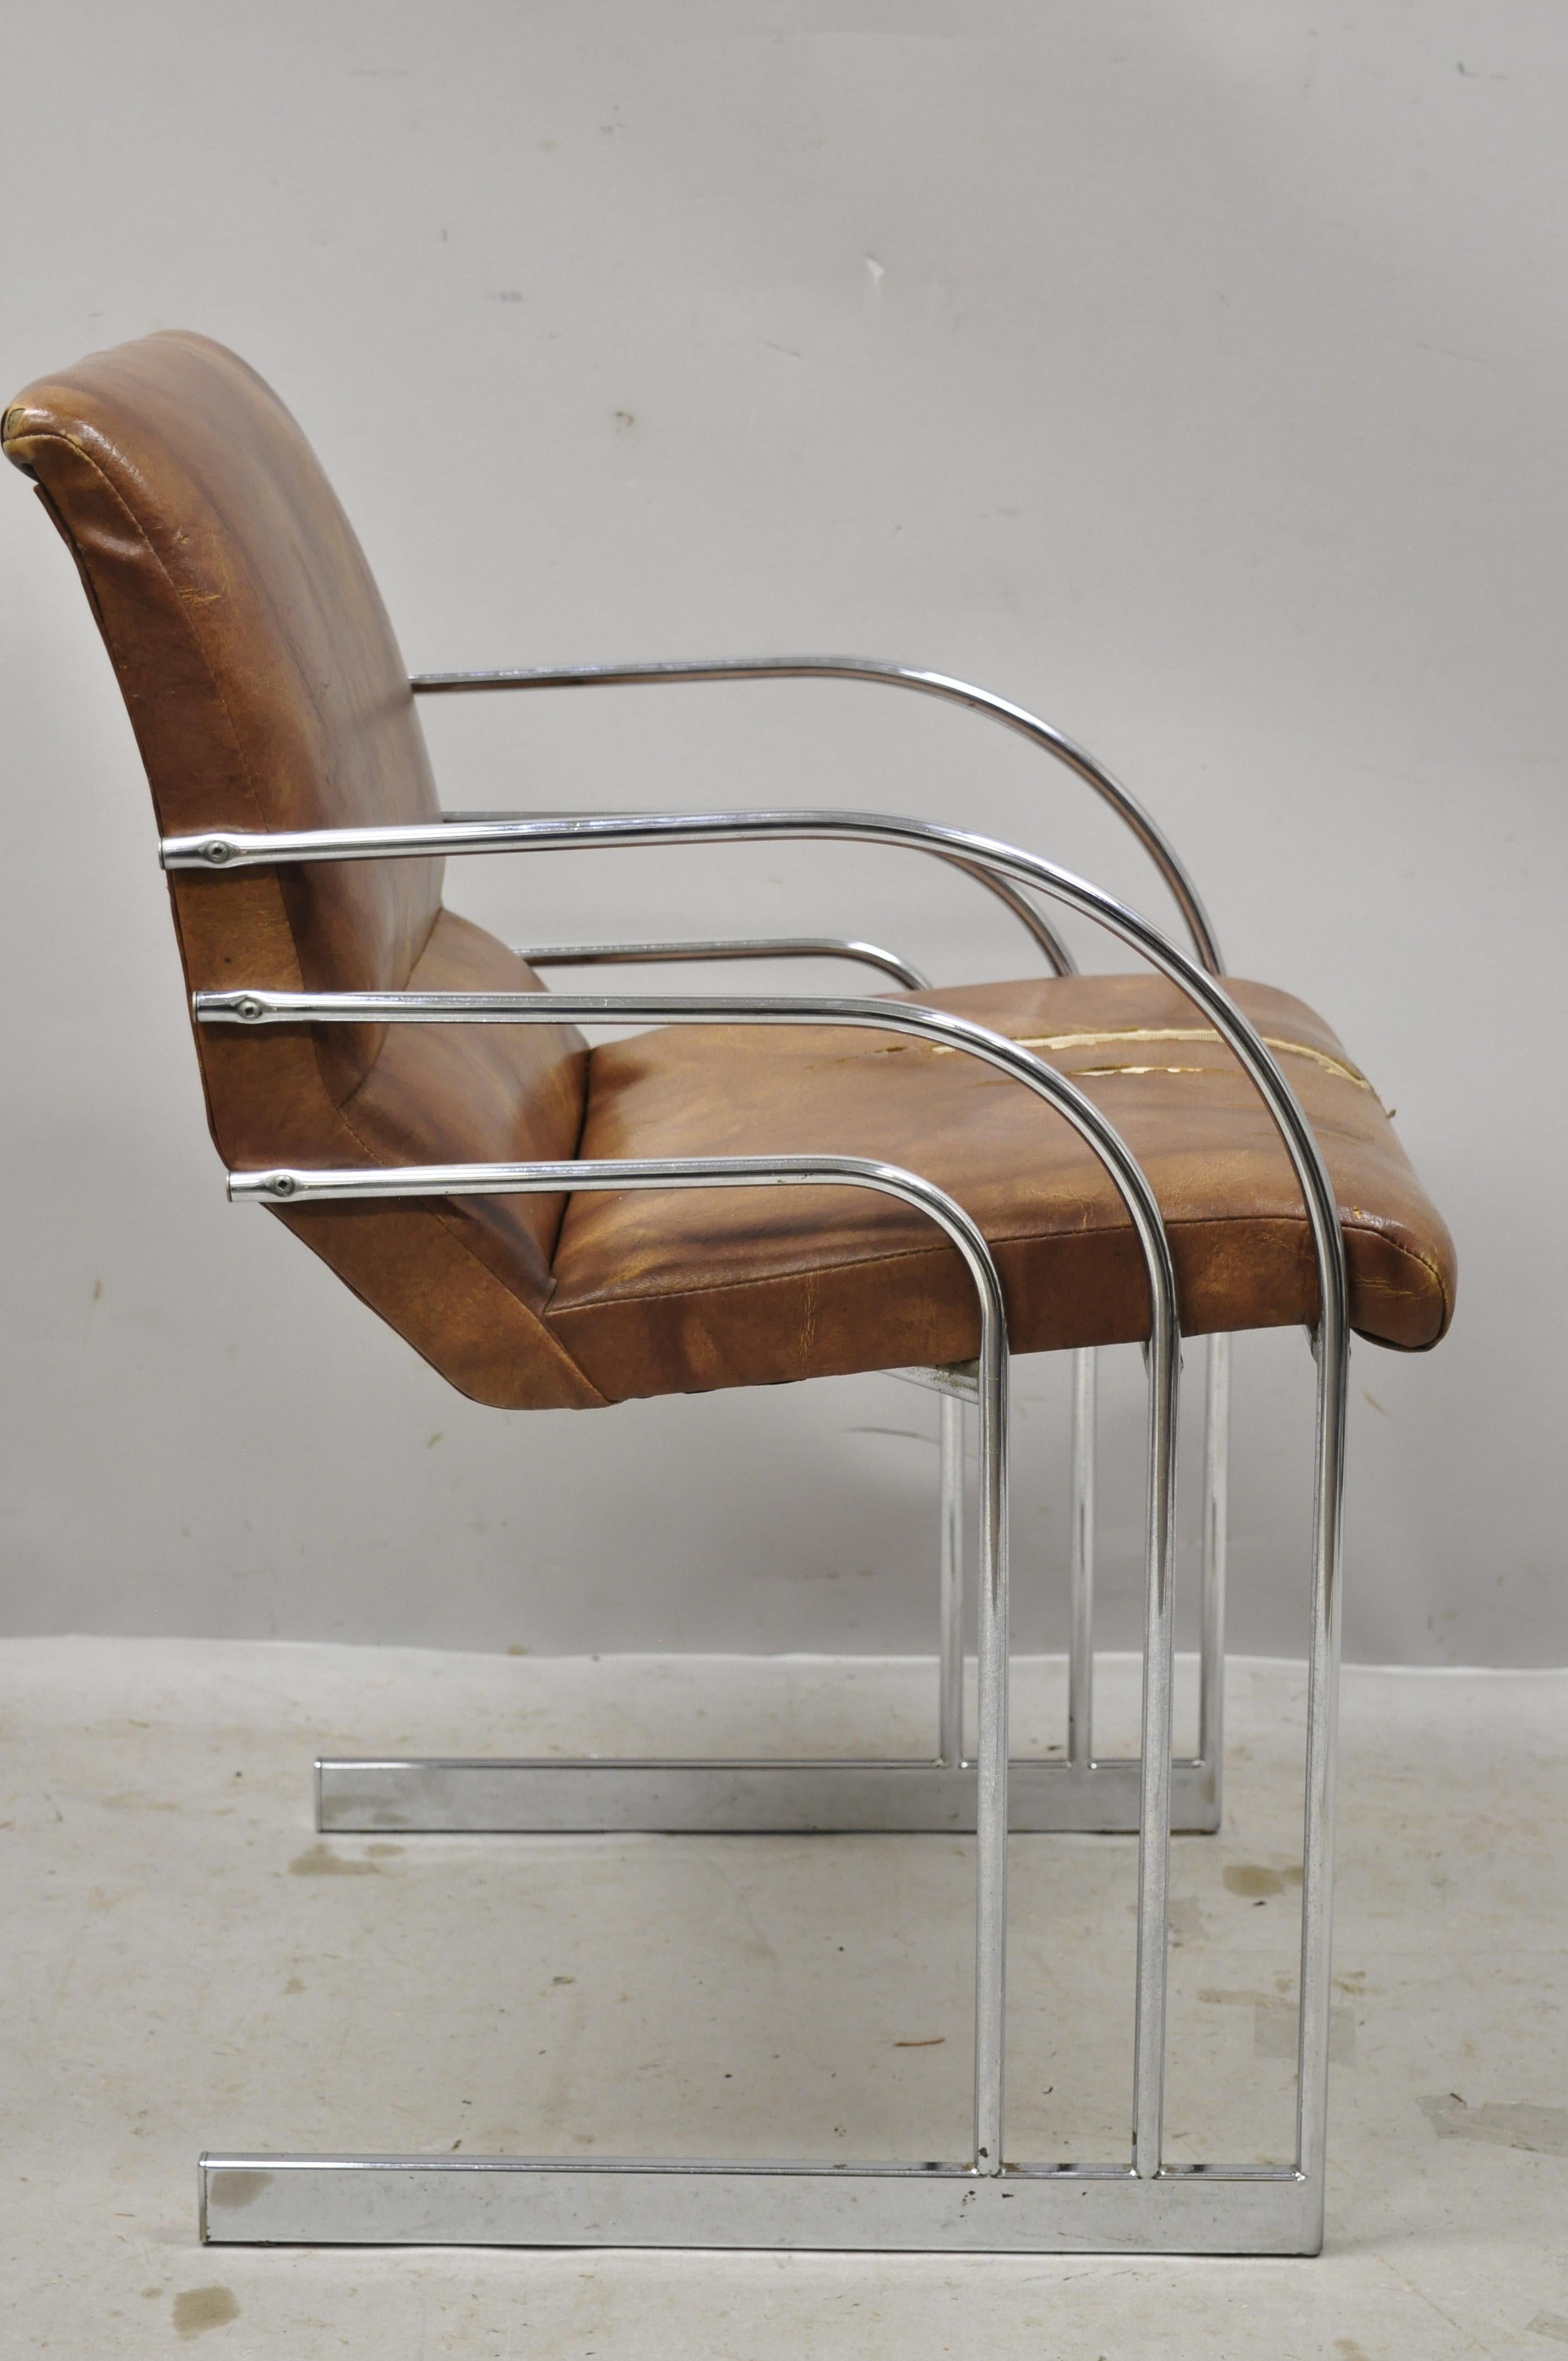 Mid-Century Modern Art Deco chrome cantilever Milo Baughman style armchair. Item features chrome cantilever frame, sweeping Art Deco design, very nice vintage item, clean modernist lines, sleek sculptural form, circa mid-20th century. Measurements: